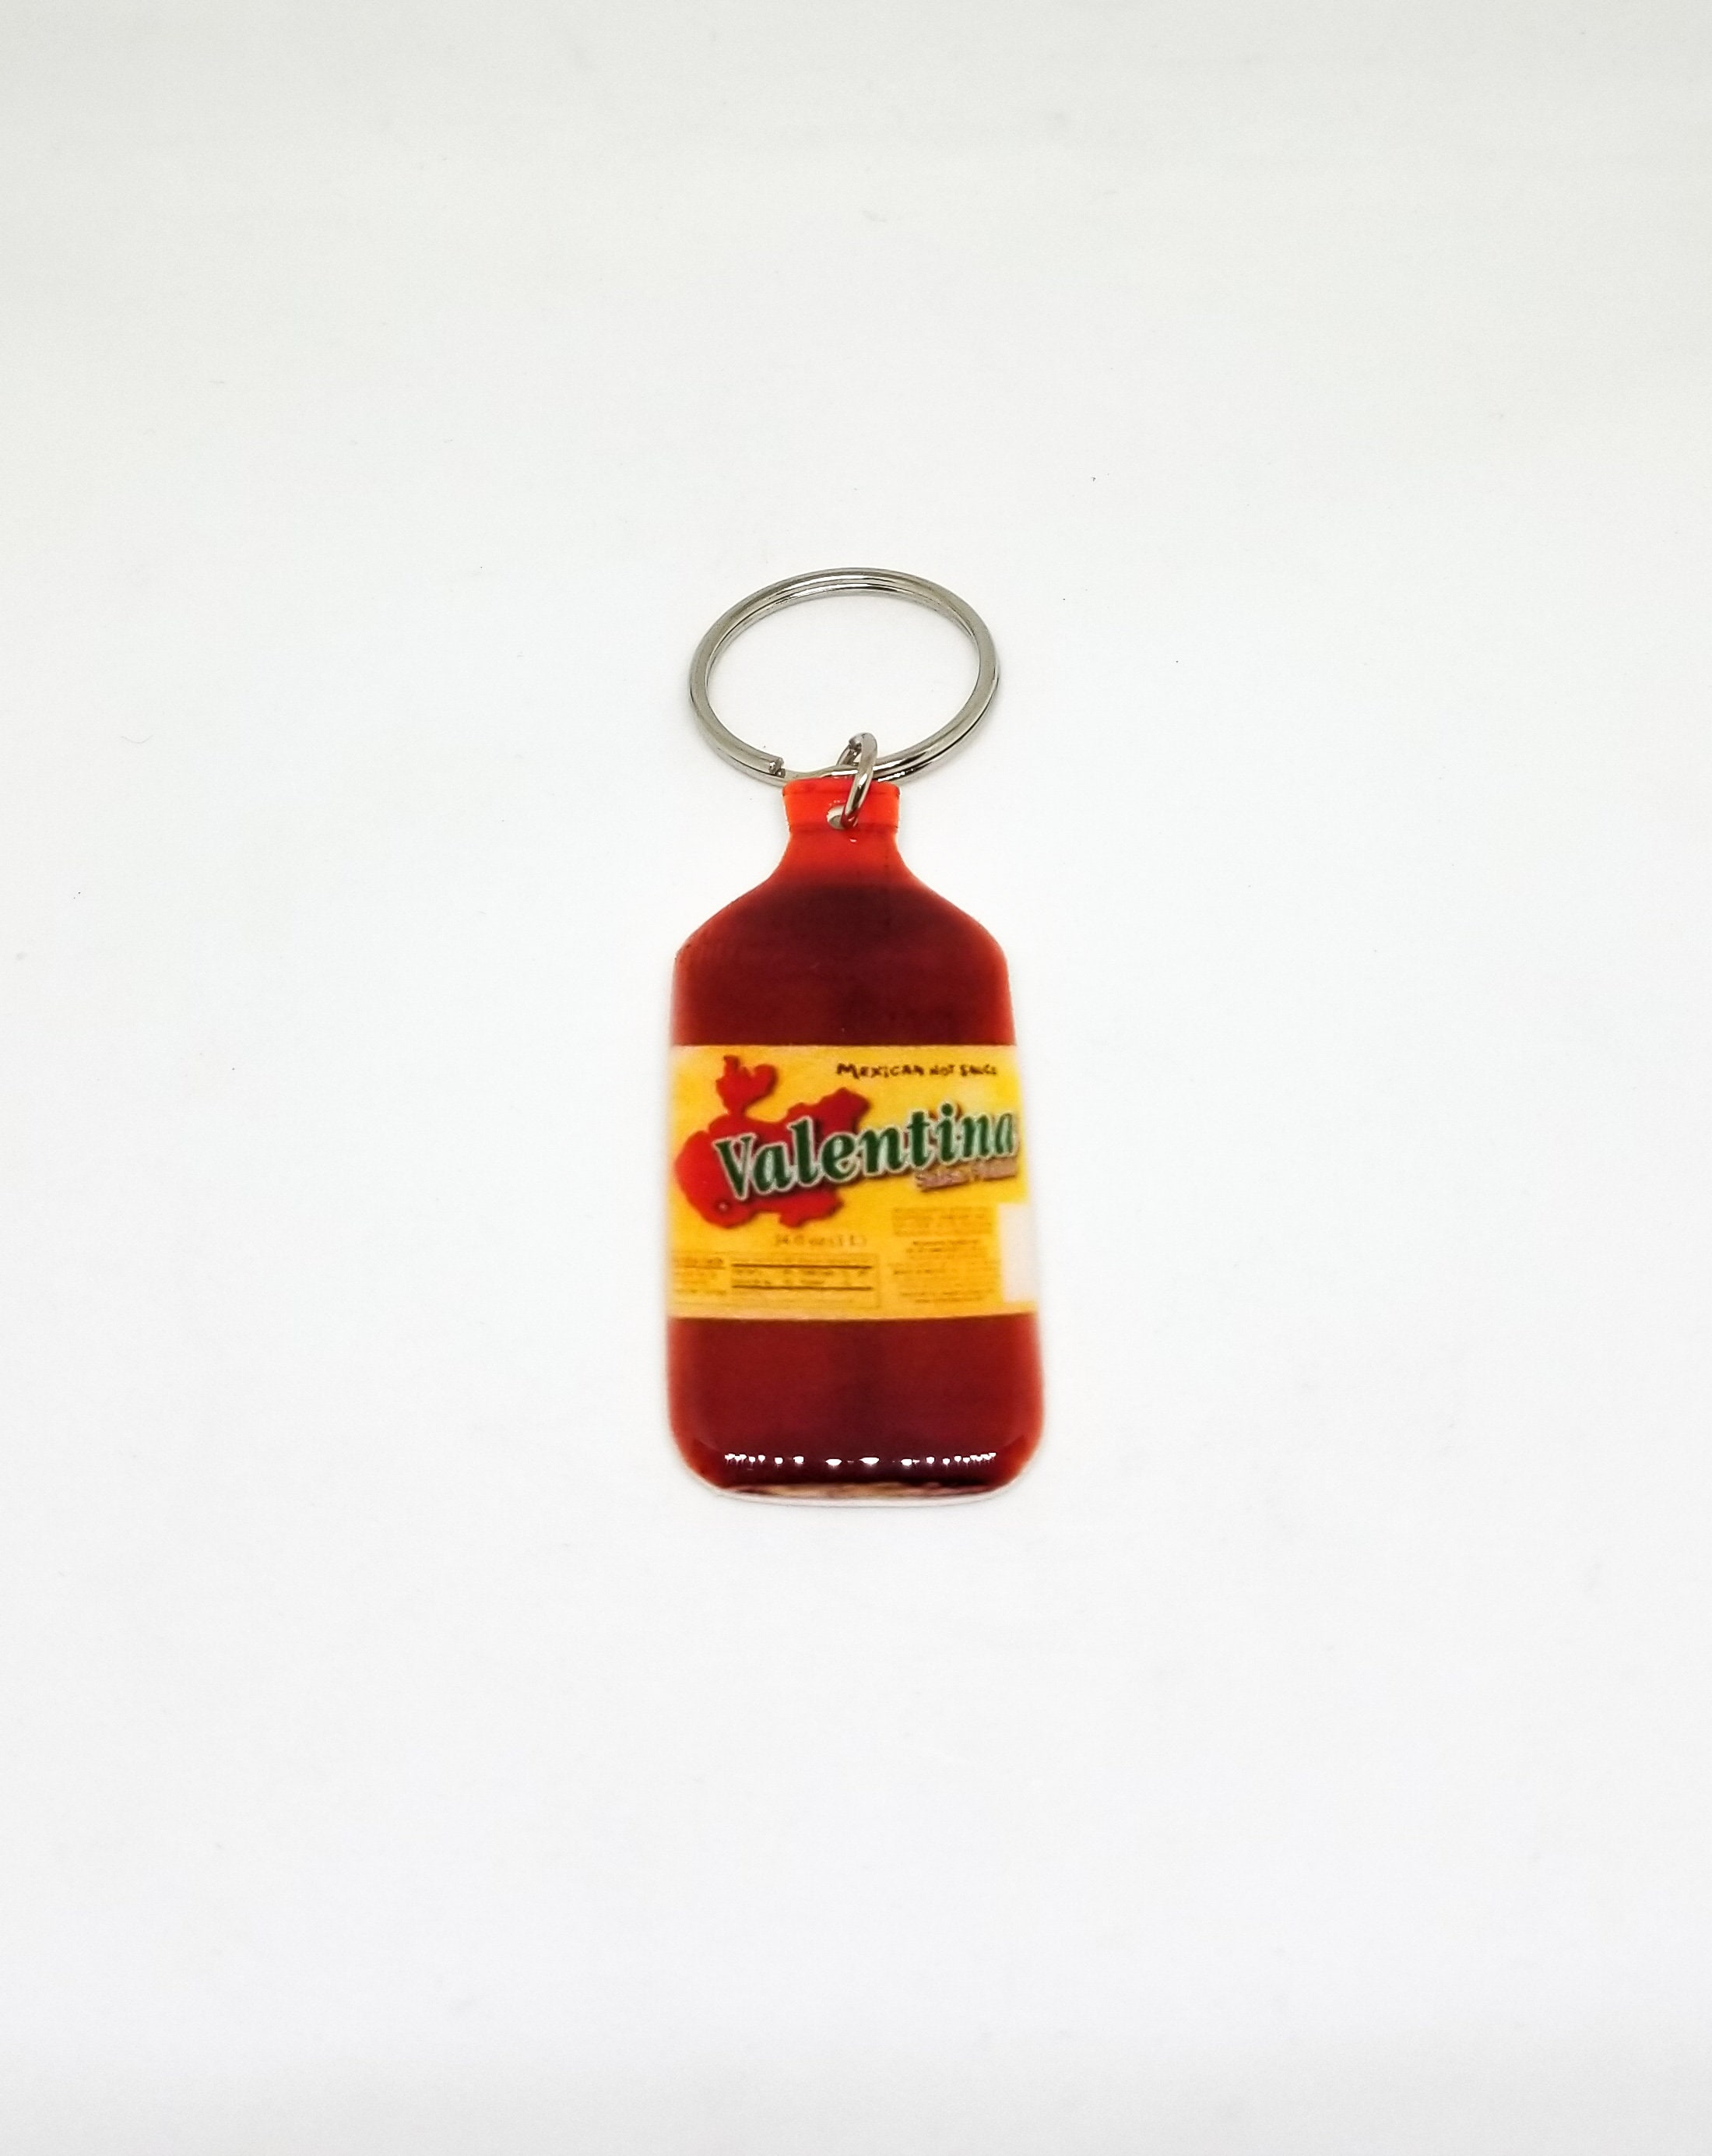  Tabasco Sauce Keychain - Includes Mini Bottle of